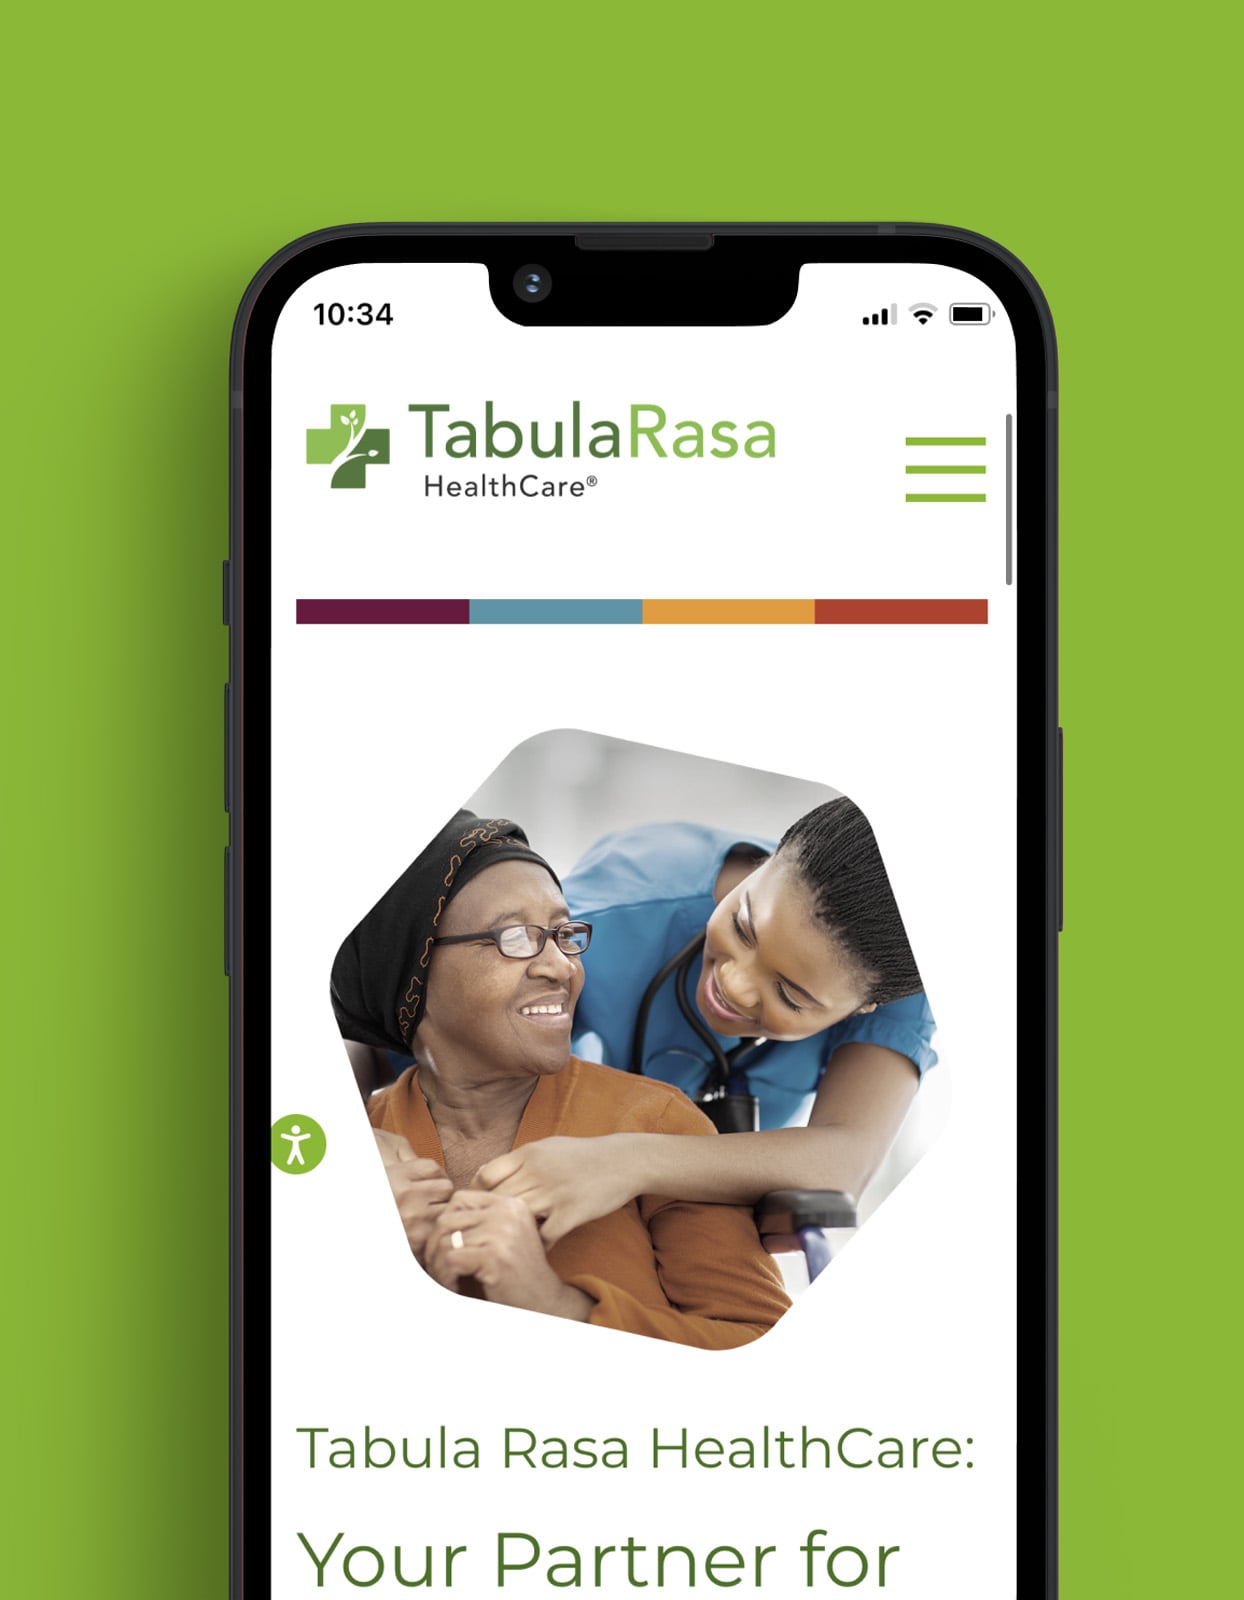 TabulaRasa Healthcare mobile application